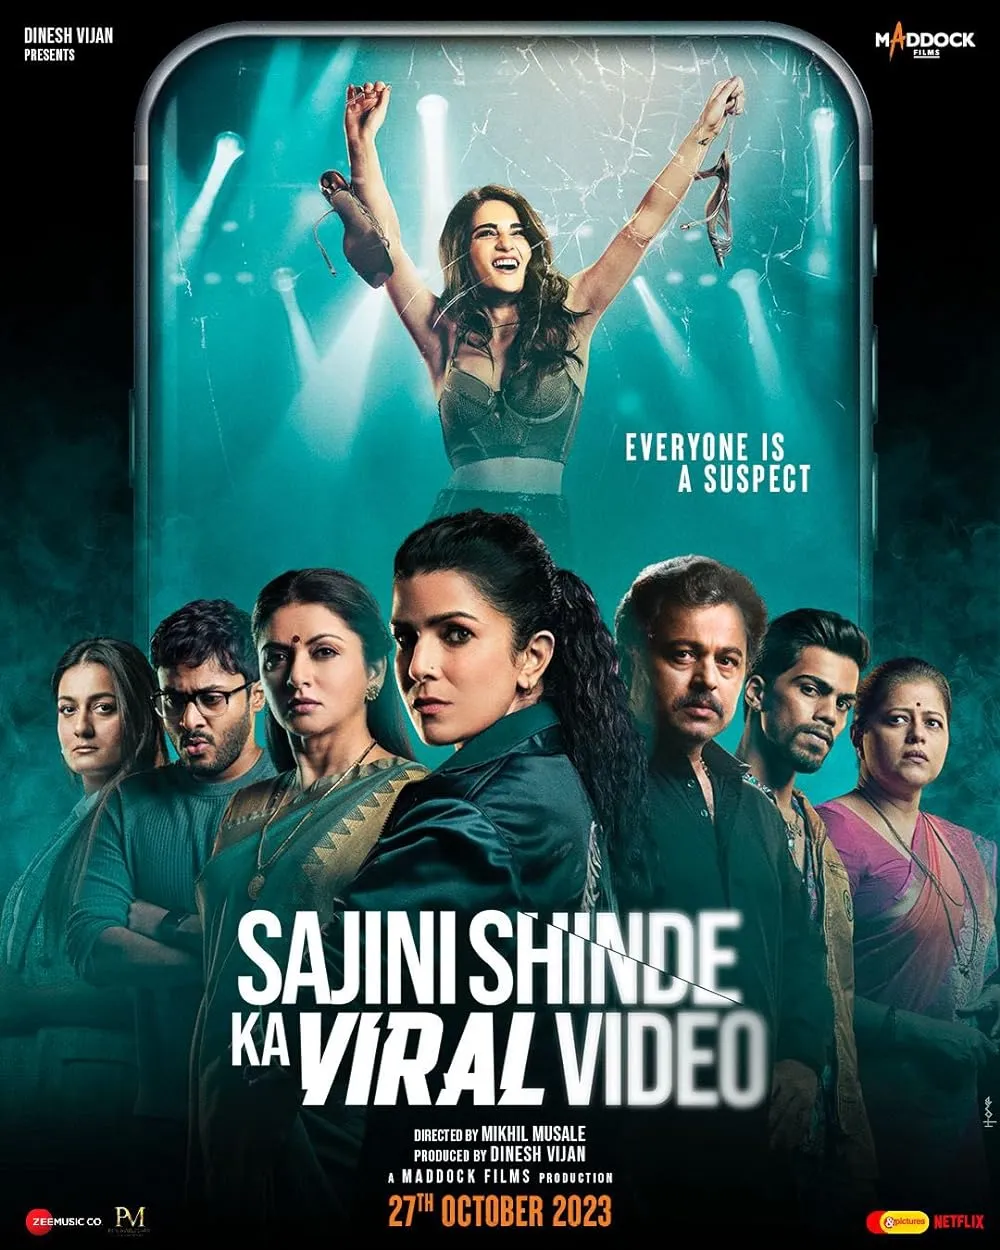 Sajini Shinde Ka Viral Video 2023 Hindi 720p HDRip ESub 1GB Download